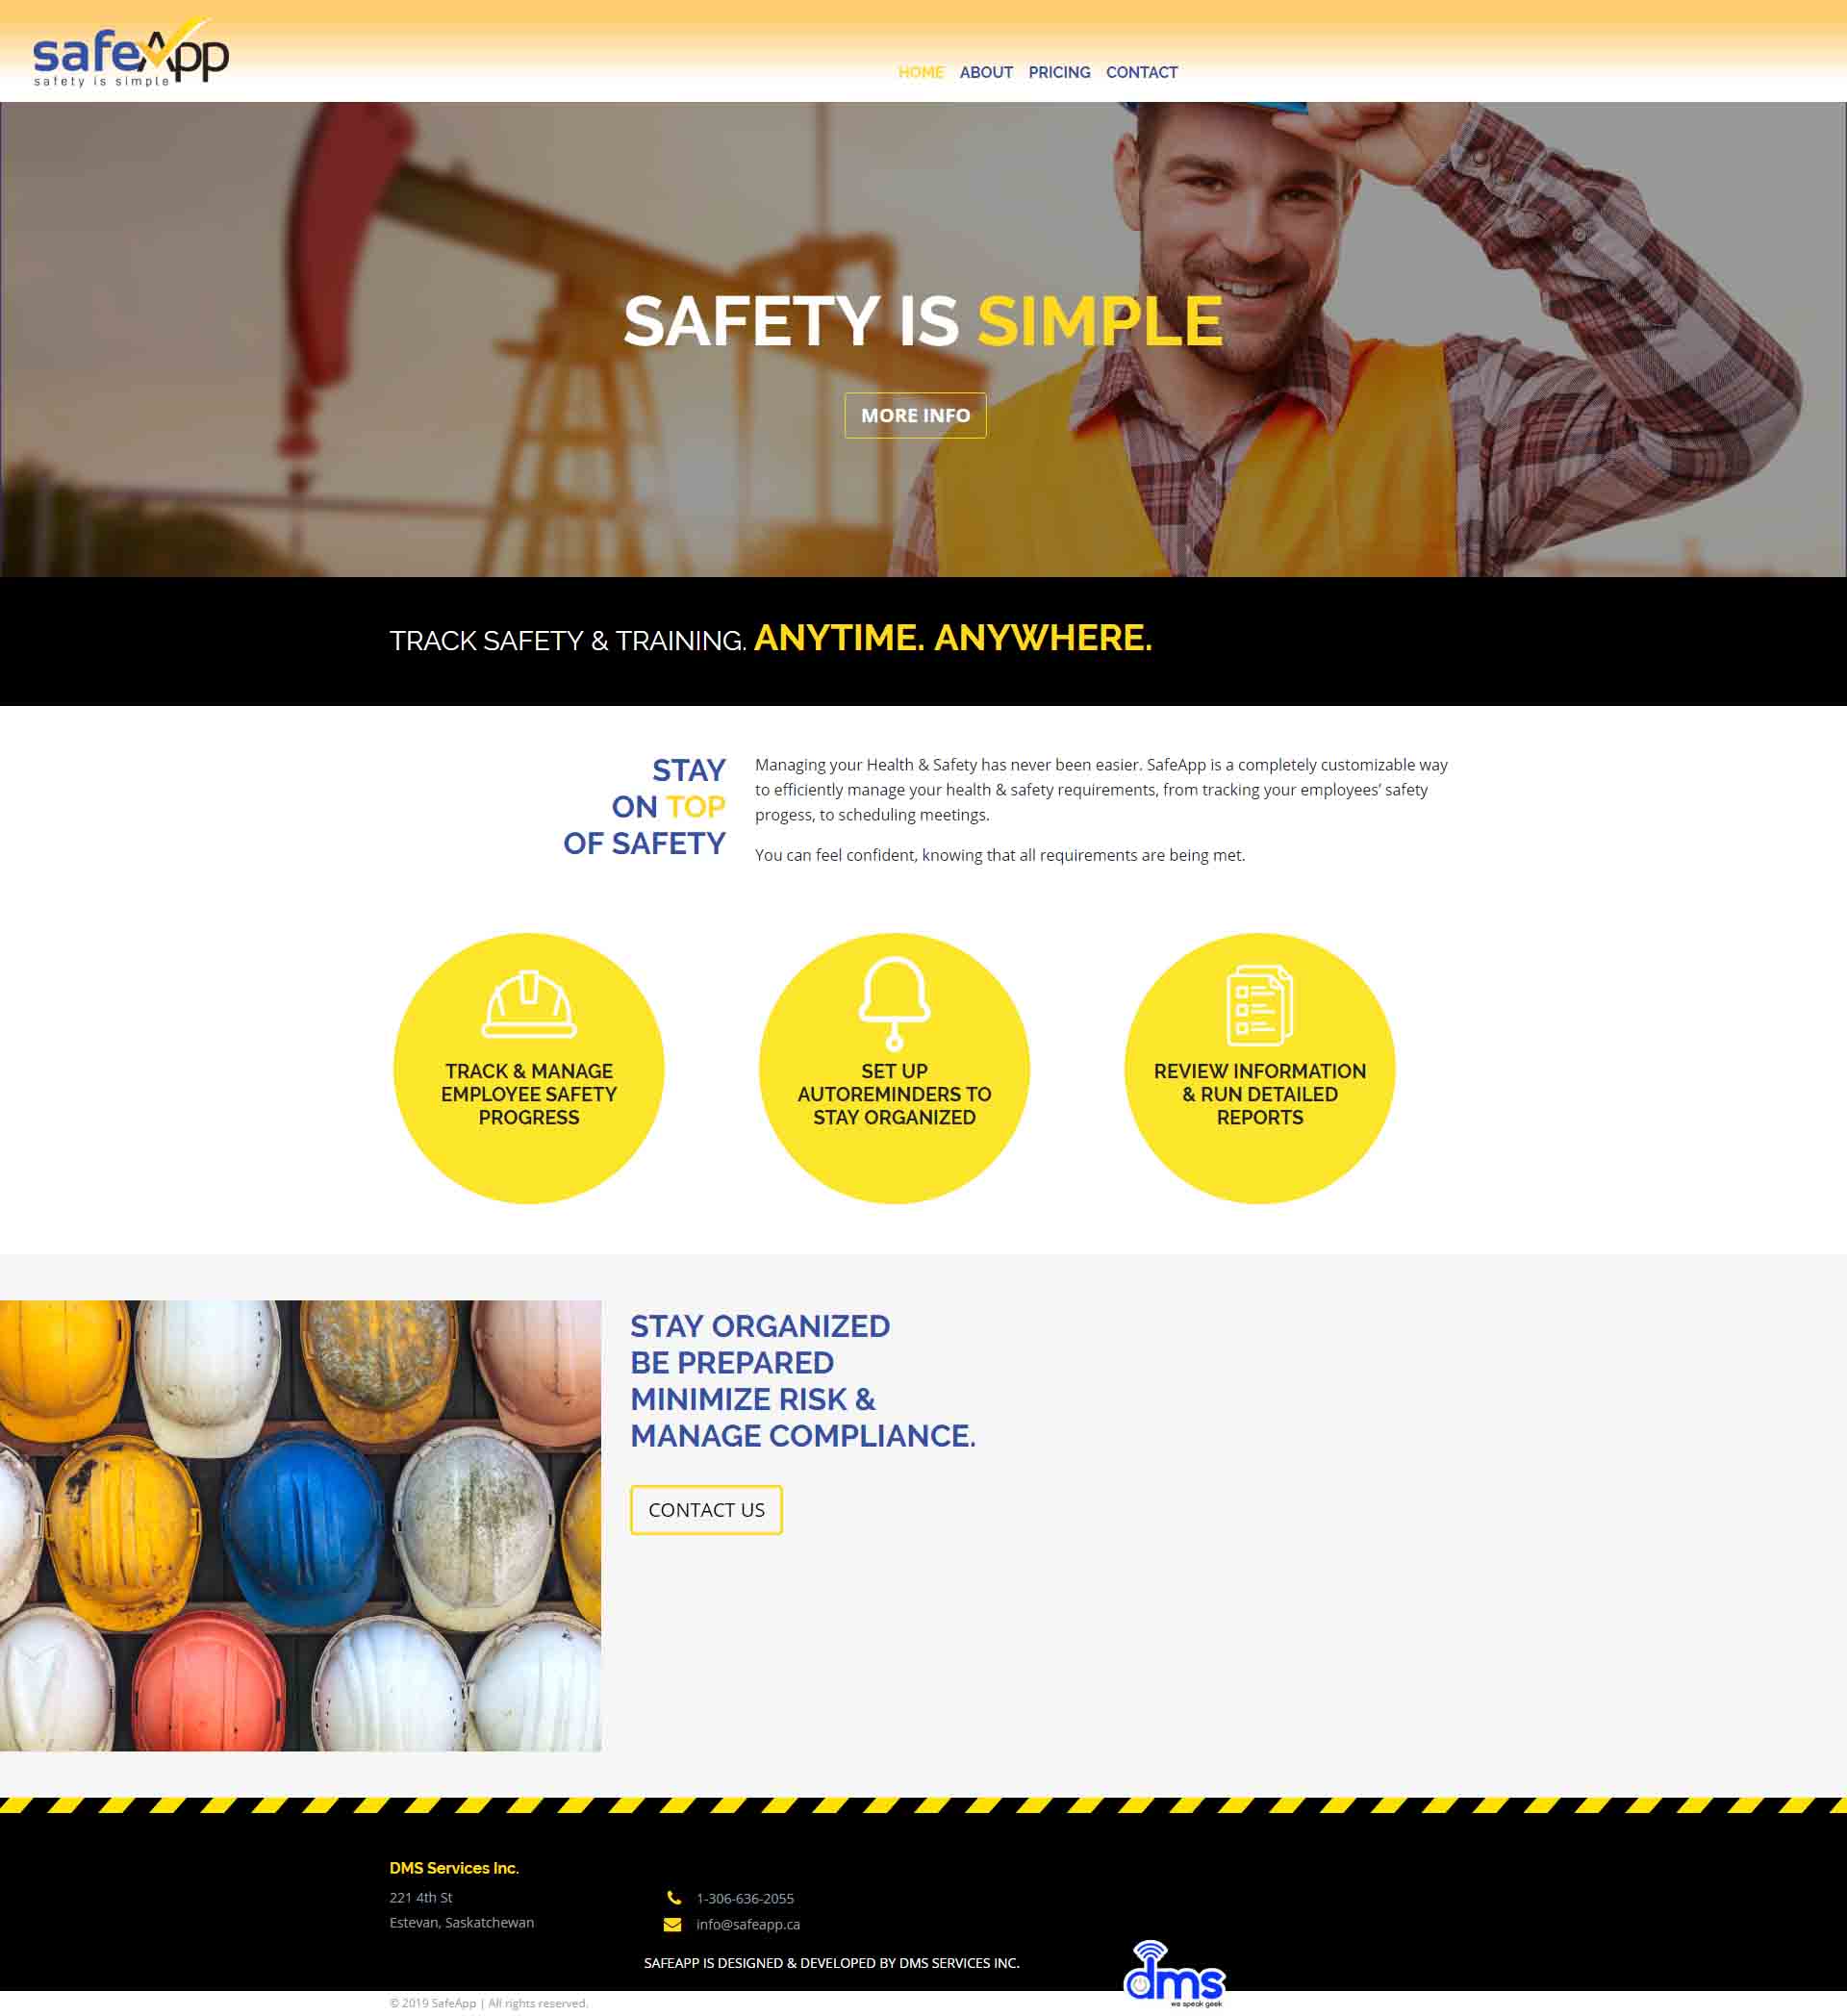 DMS Services Website Portfolio - SafeApp